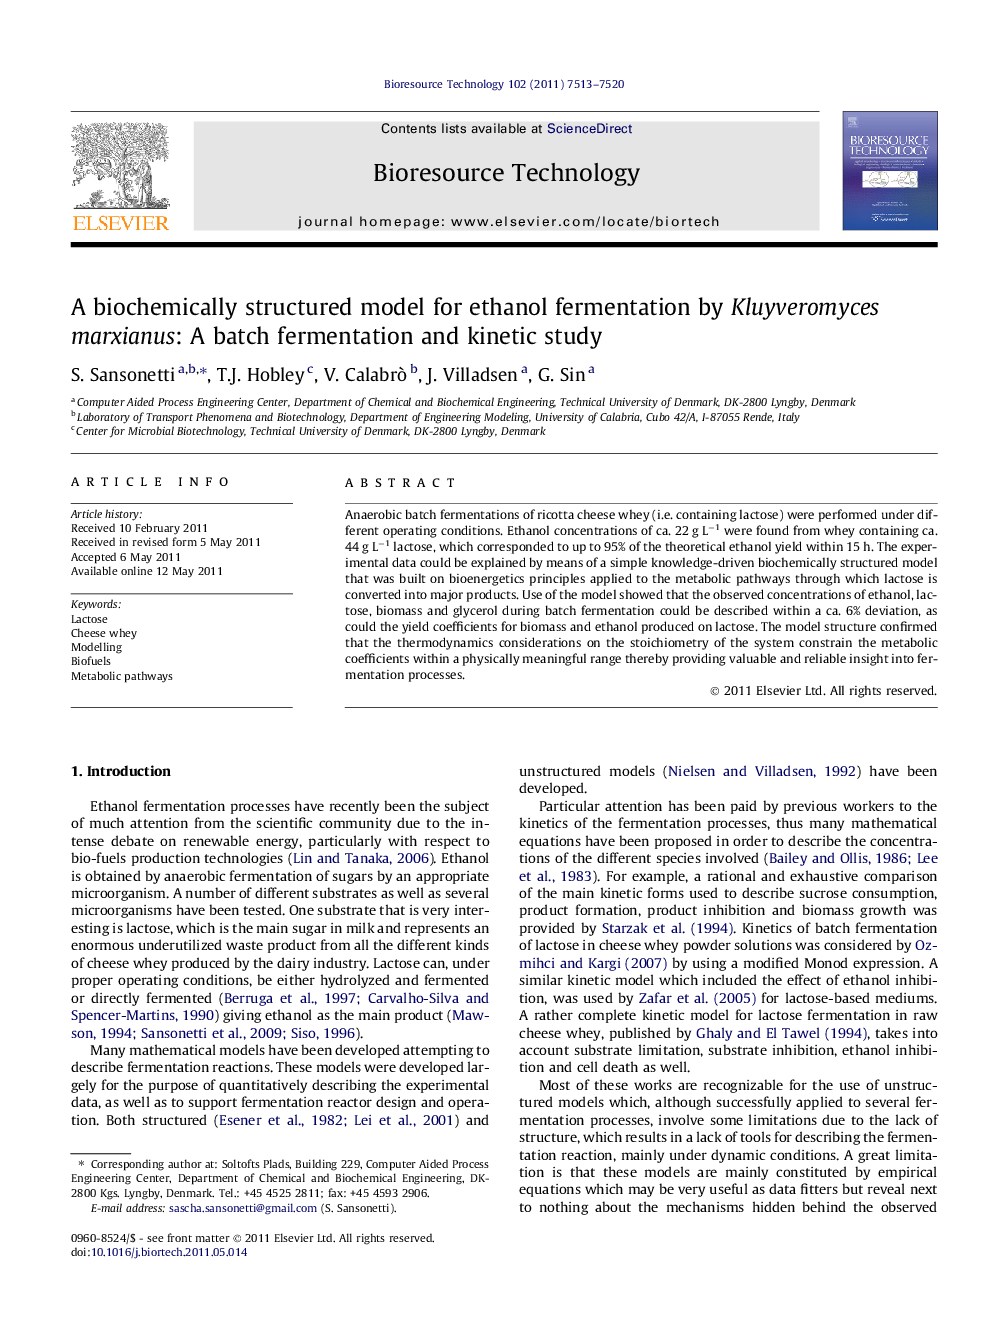 A biochemically structured model for ethanol fermentation by Kluyveromyces marxianus: A batch fermentation and kinetic study